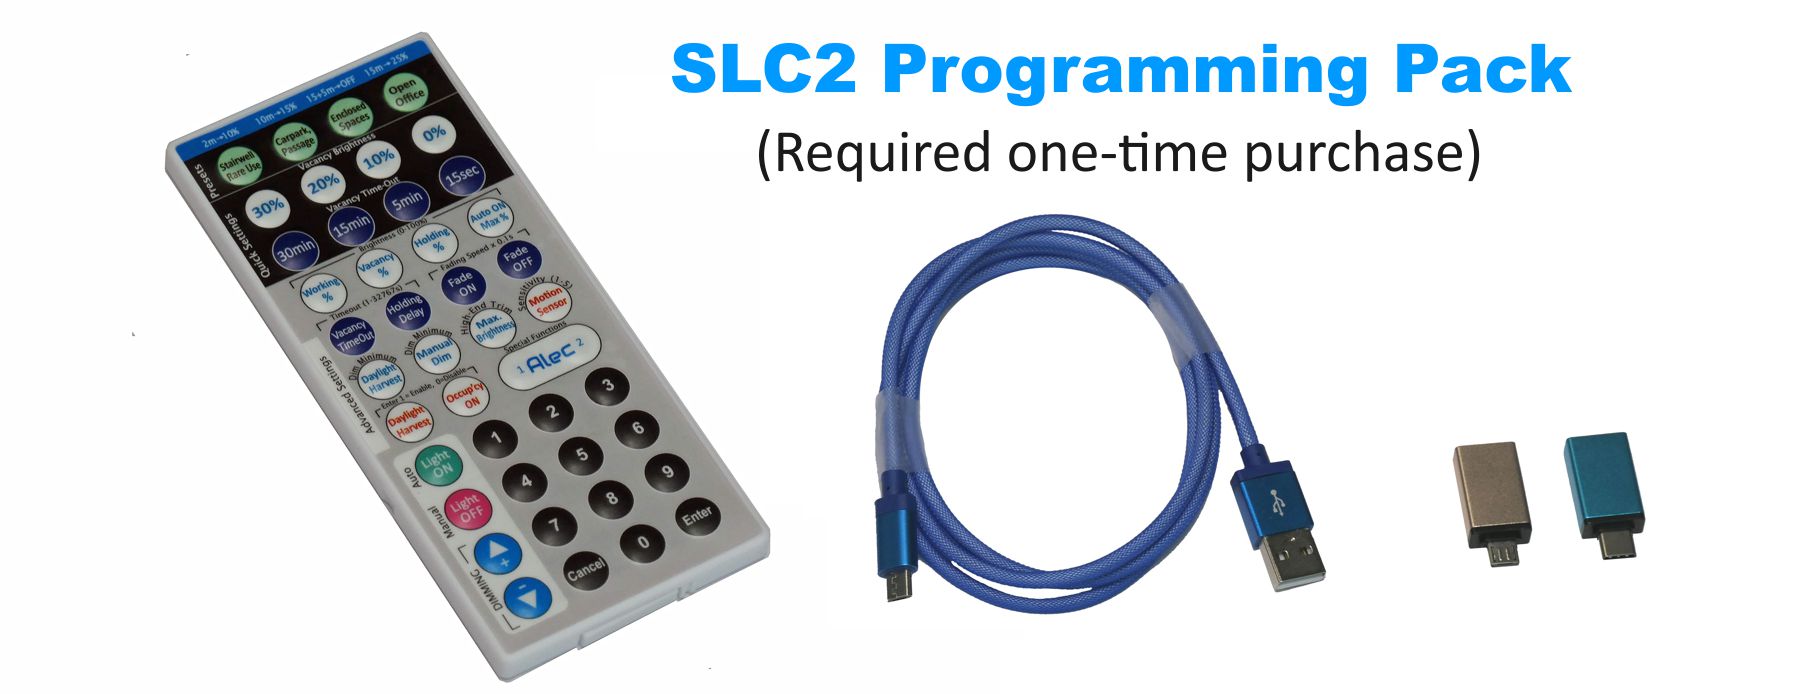 SLC2 Programming Pack